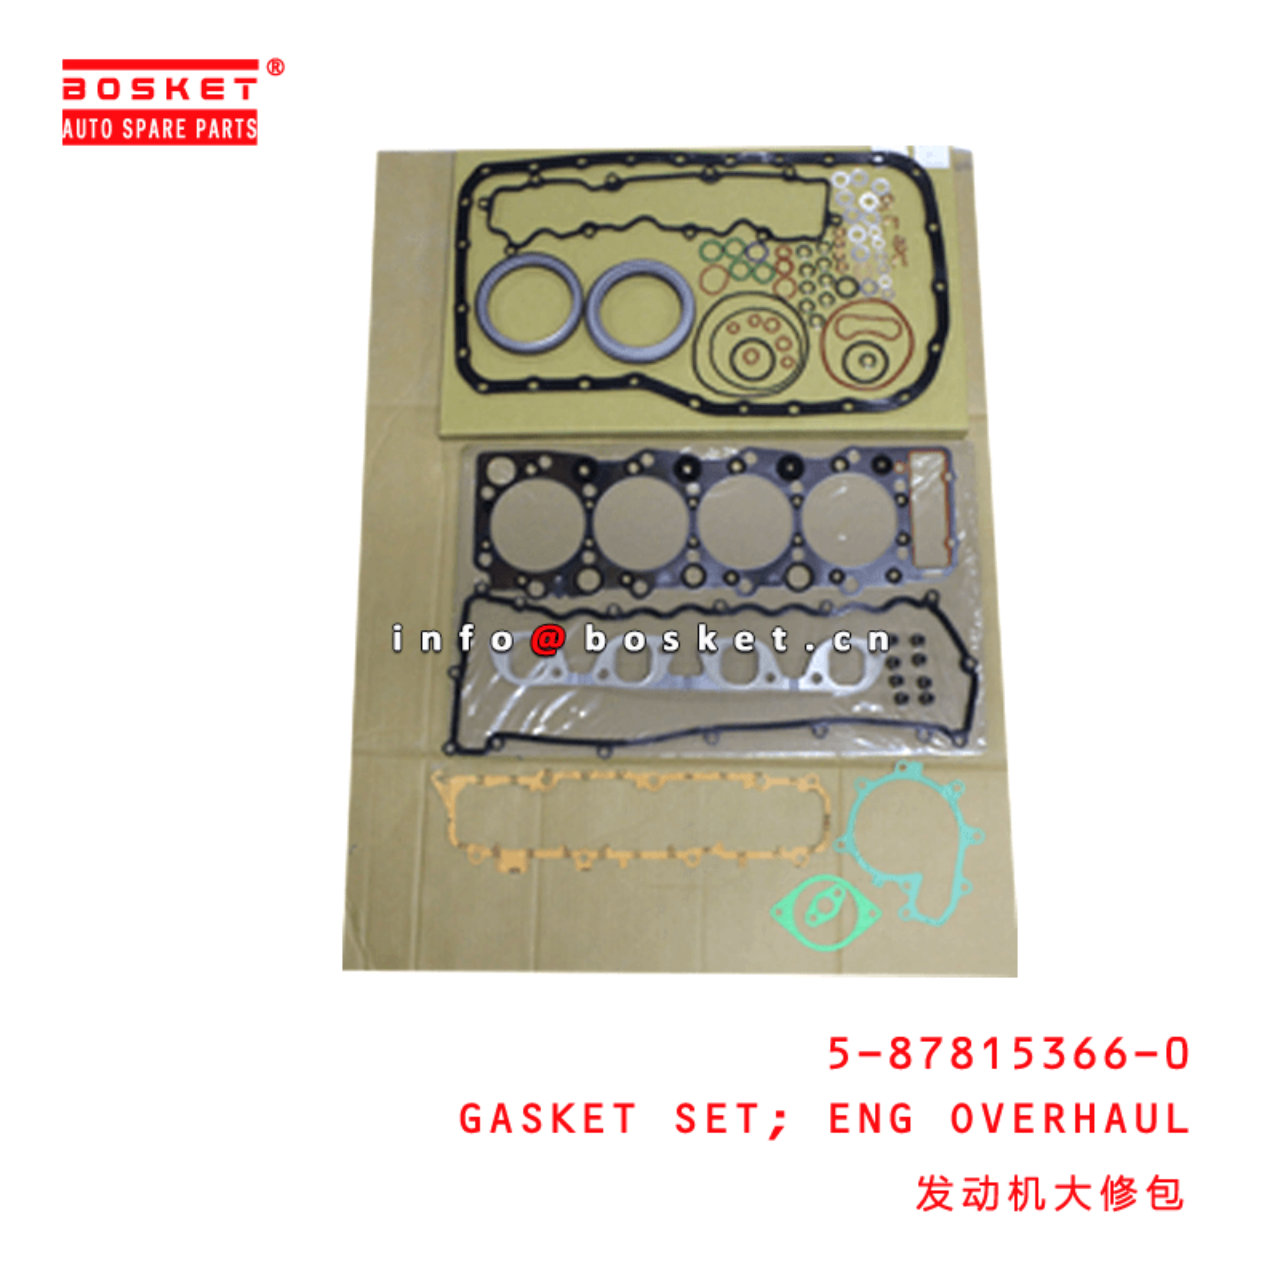 5-87815366-0 Engine Overhaul Gasket Set 5878153660 Suitable for ISUZU NMR 4JJ1T